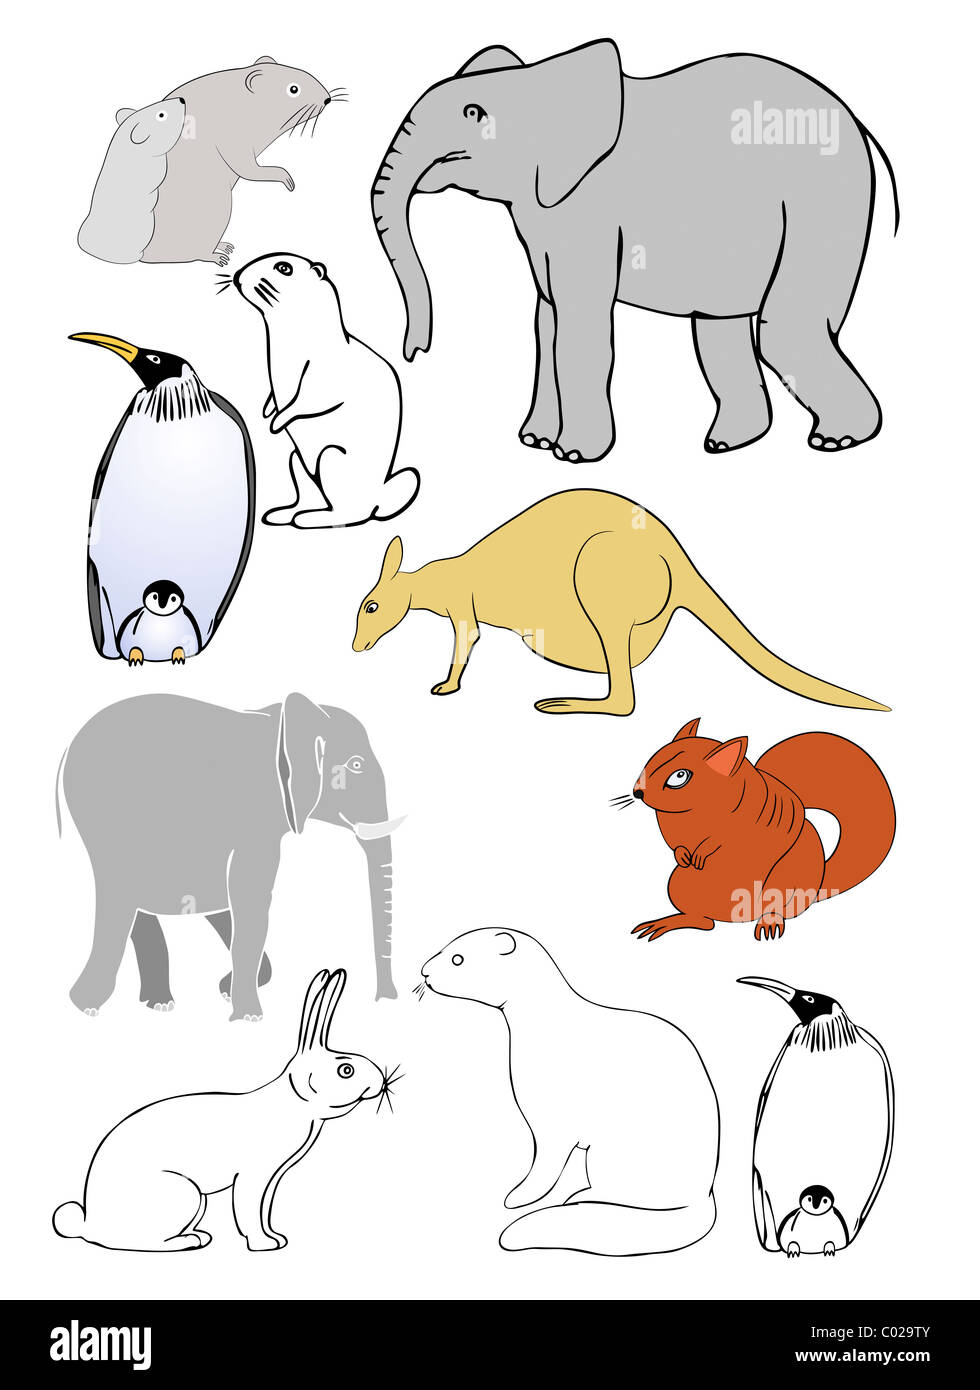 Illustration of the various animals Stock Photo